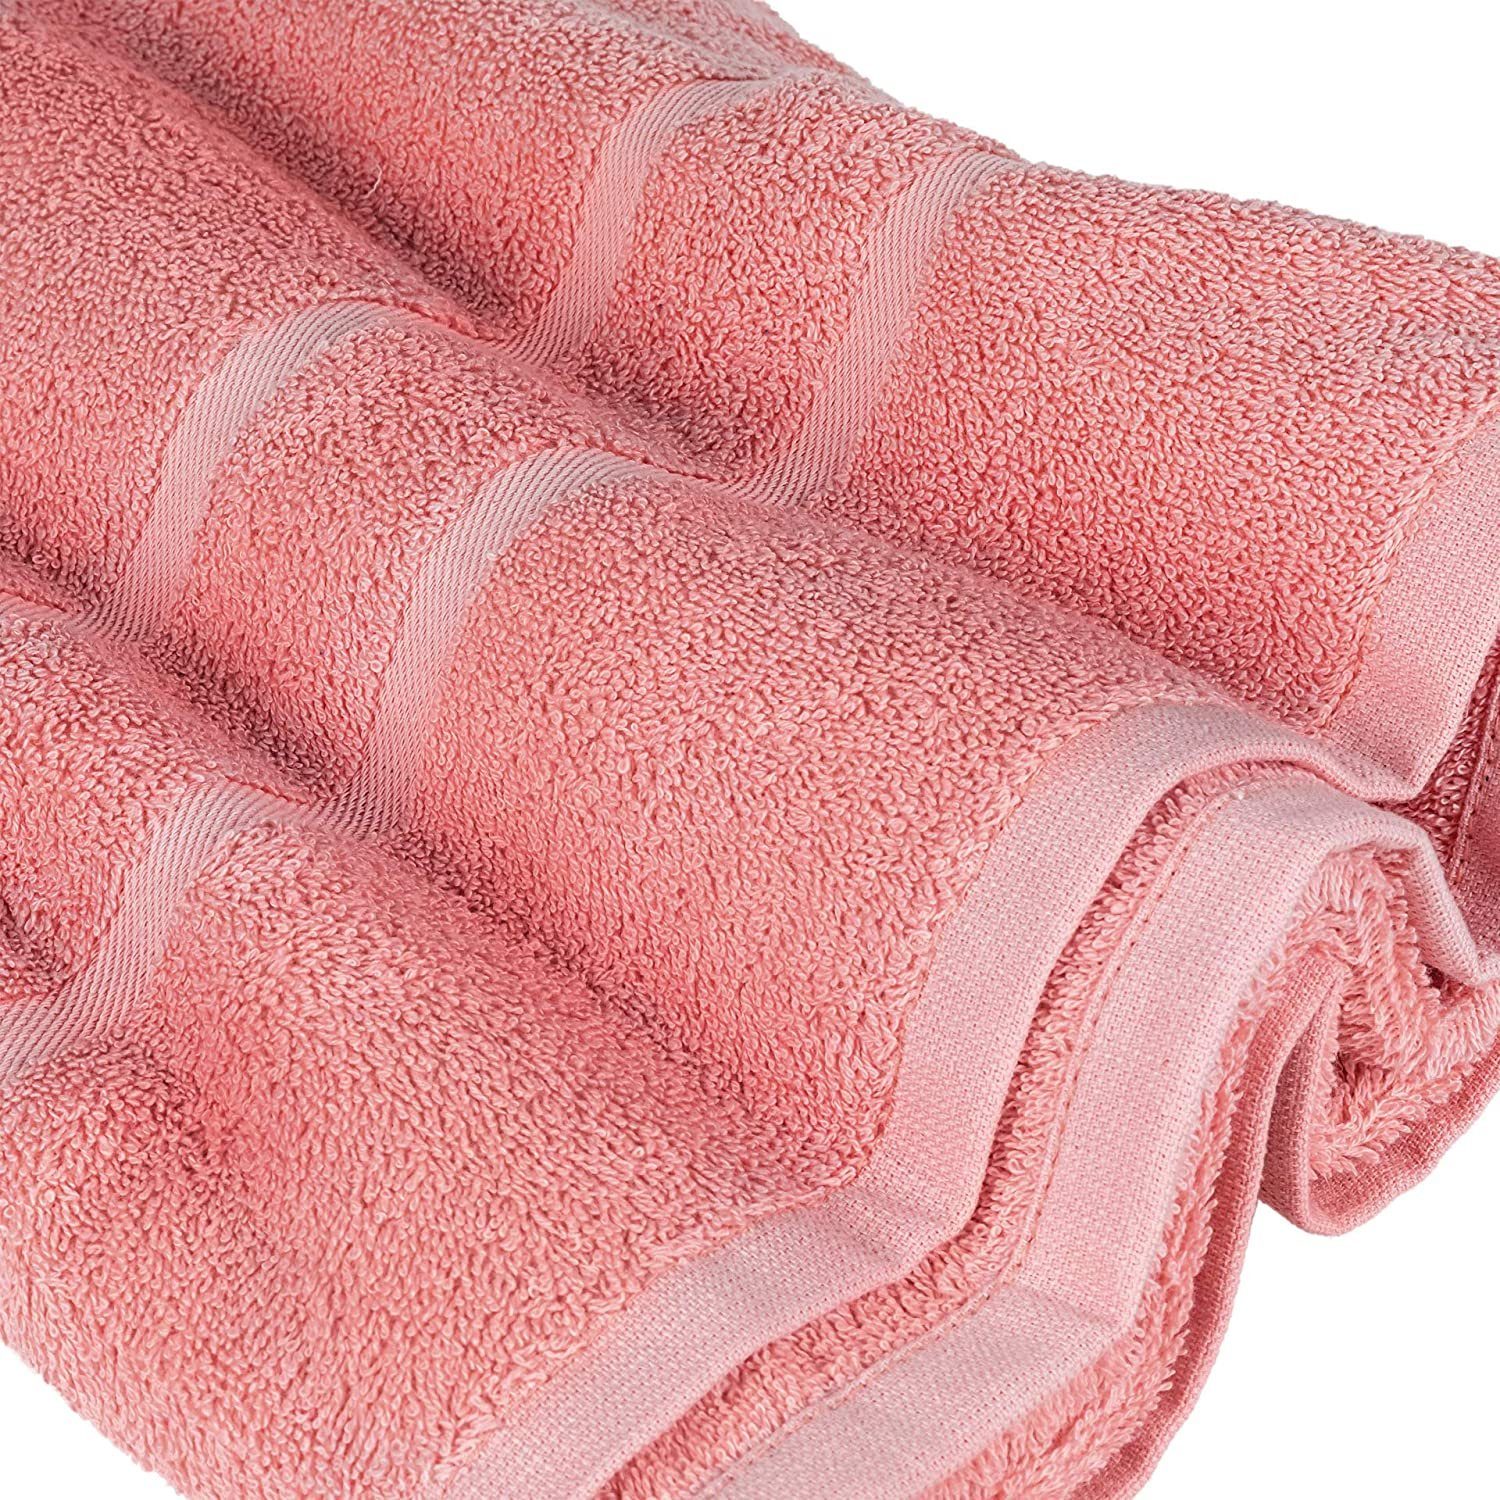 StickandShine Handtuch Set 100% Gästehandtuch 2x SET (Spar-SET) Baumwolle, Lachs 4x 4x Handtücher Duschtücher